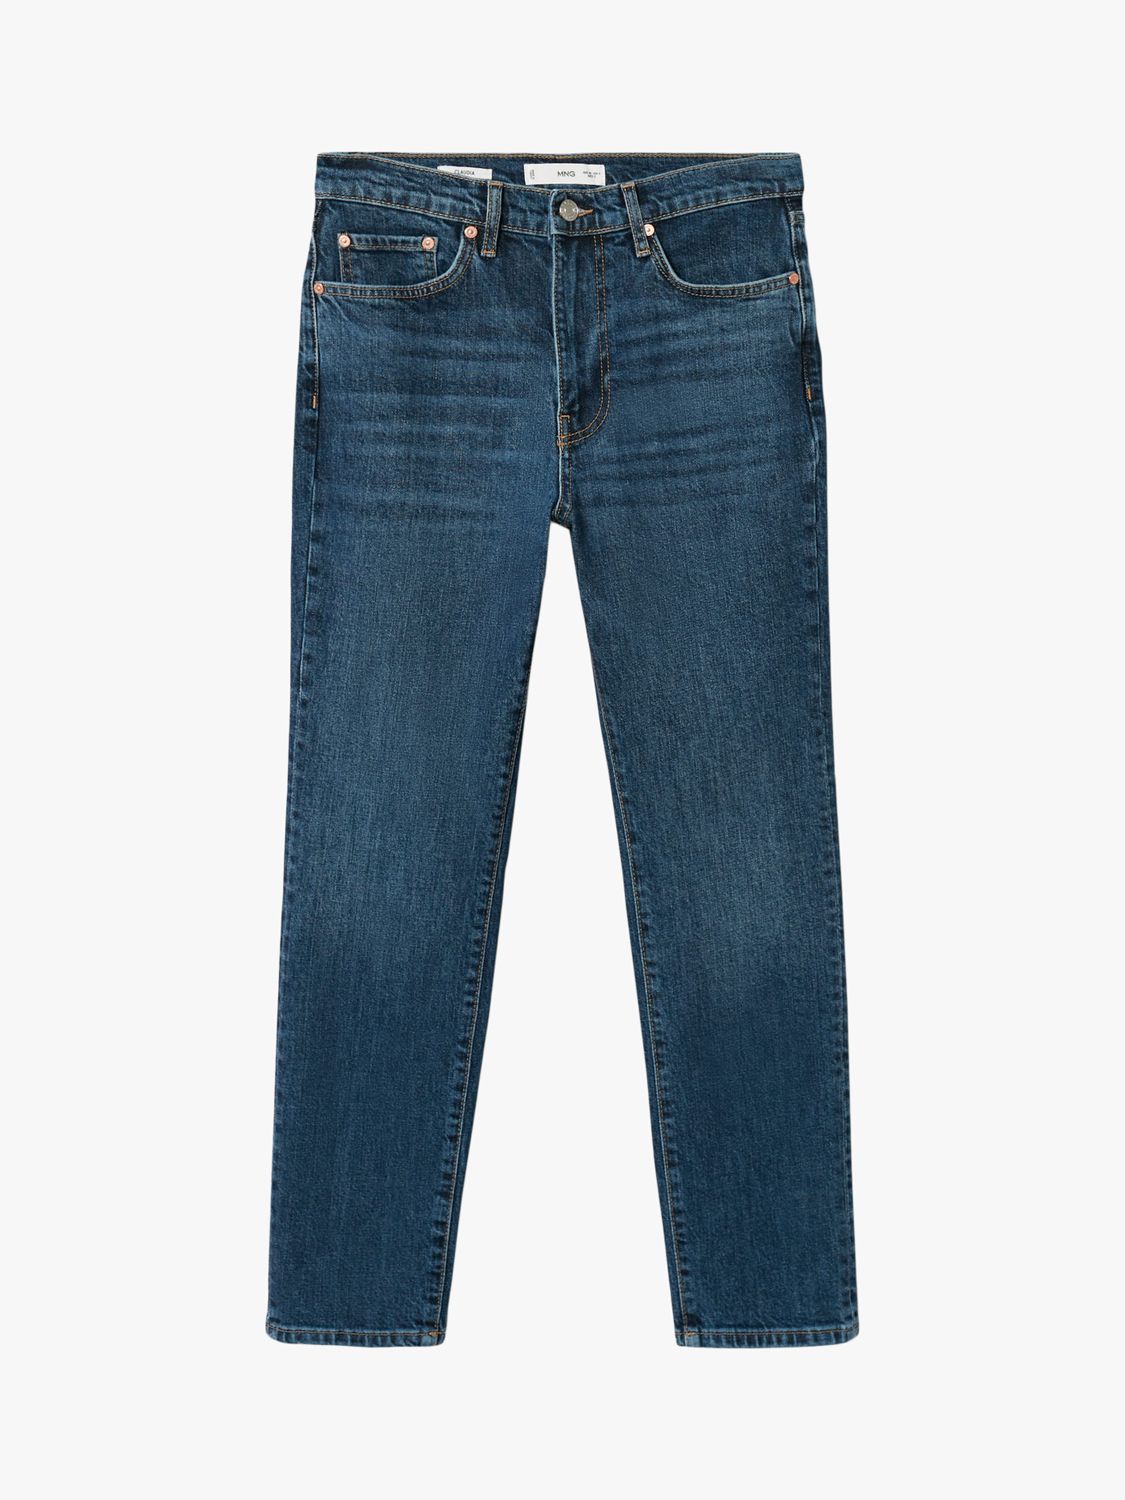 Mango Claudia Slim Leg Cropped Jeans, Mid Blue at John Lewis & Partners